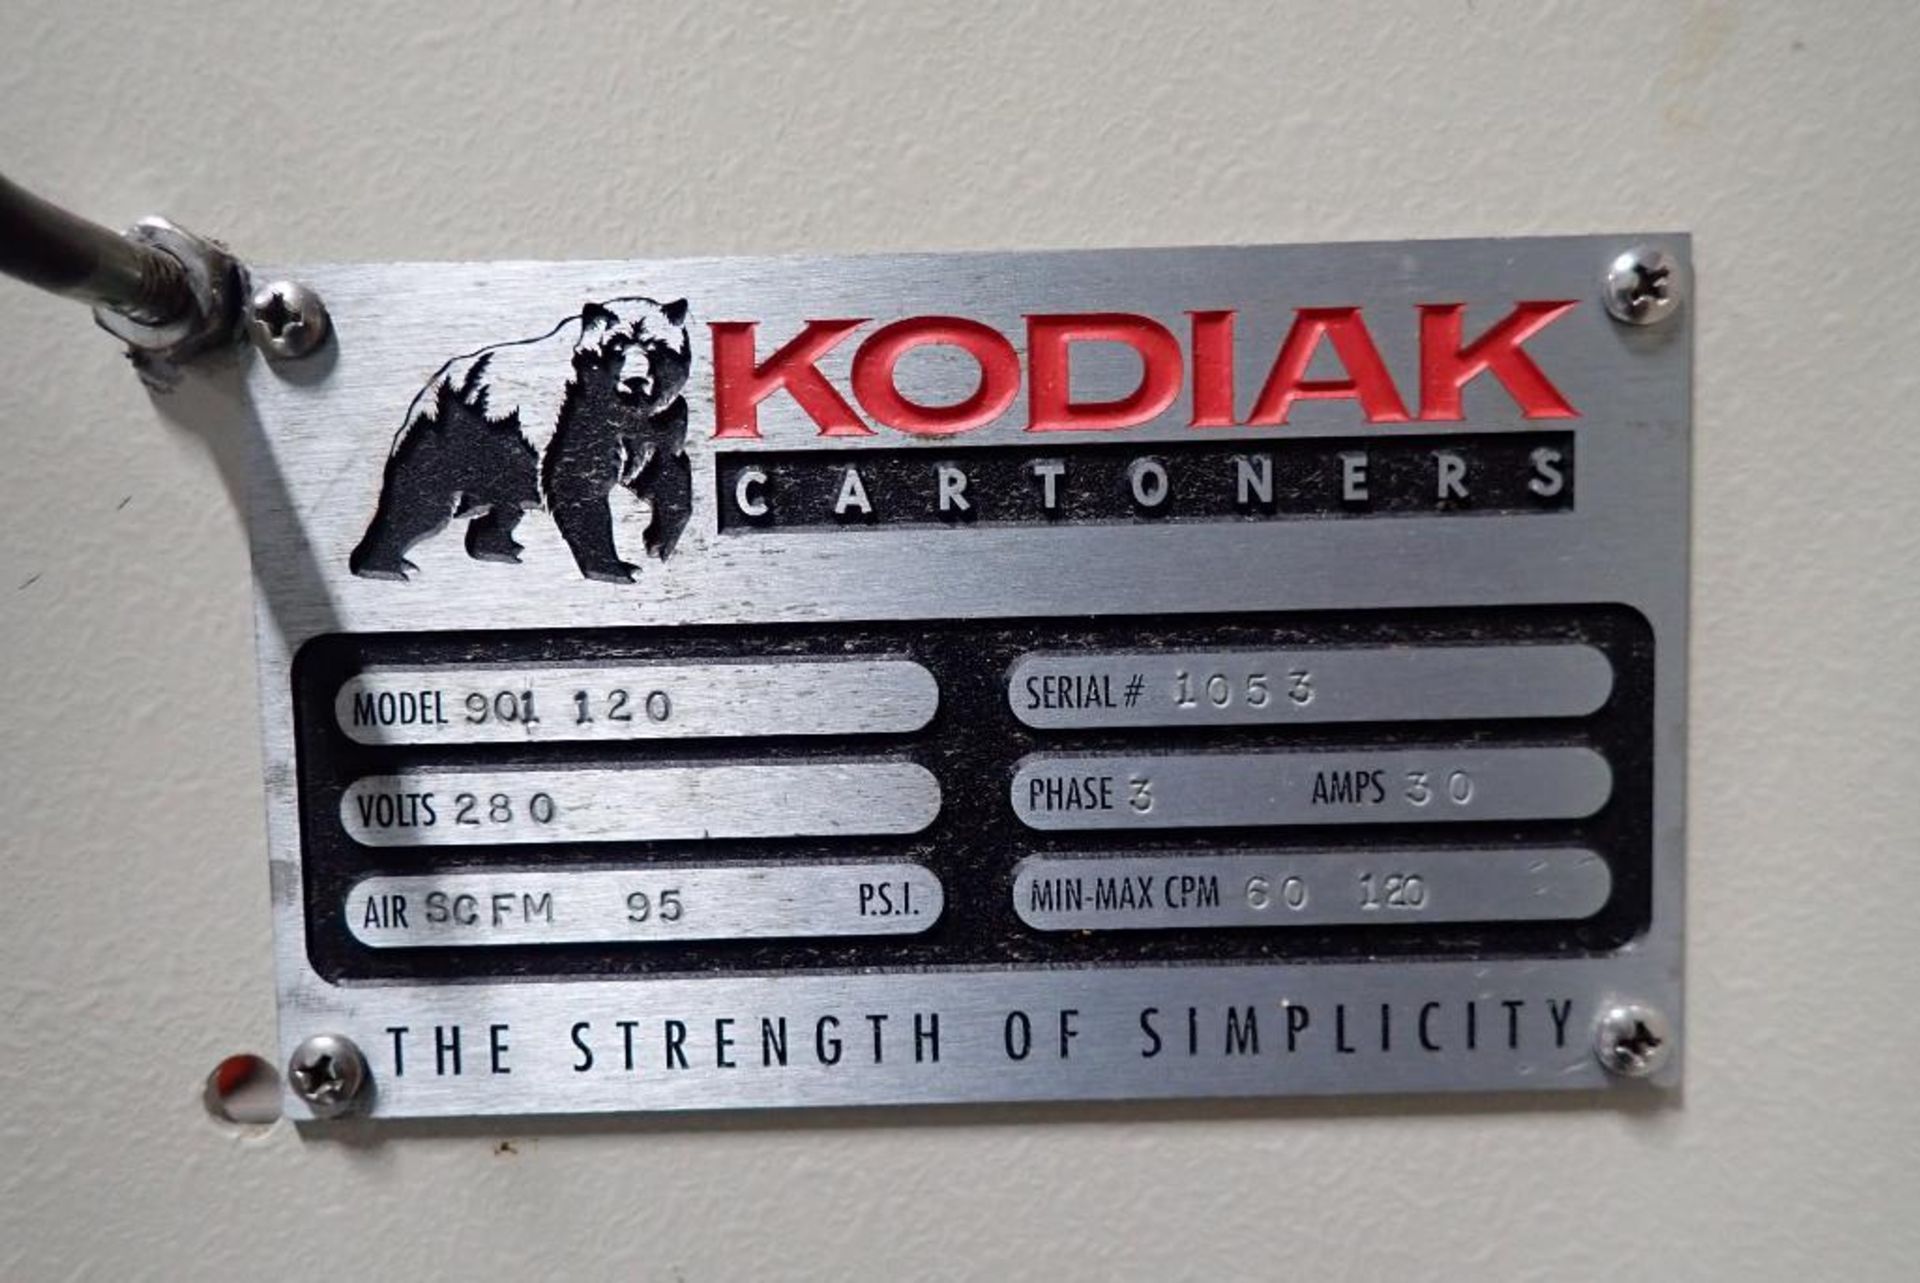 Kodiak hand cartoner - Image 26 of 27